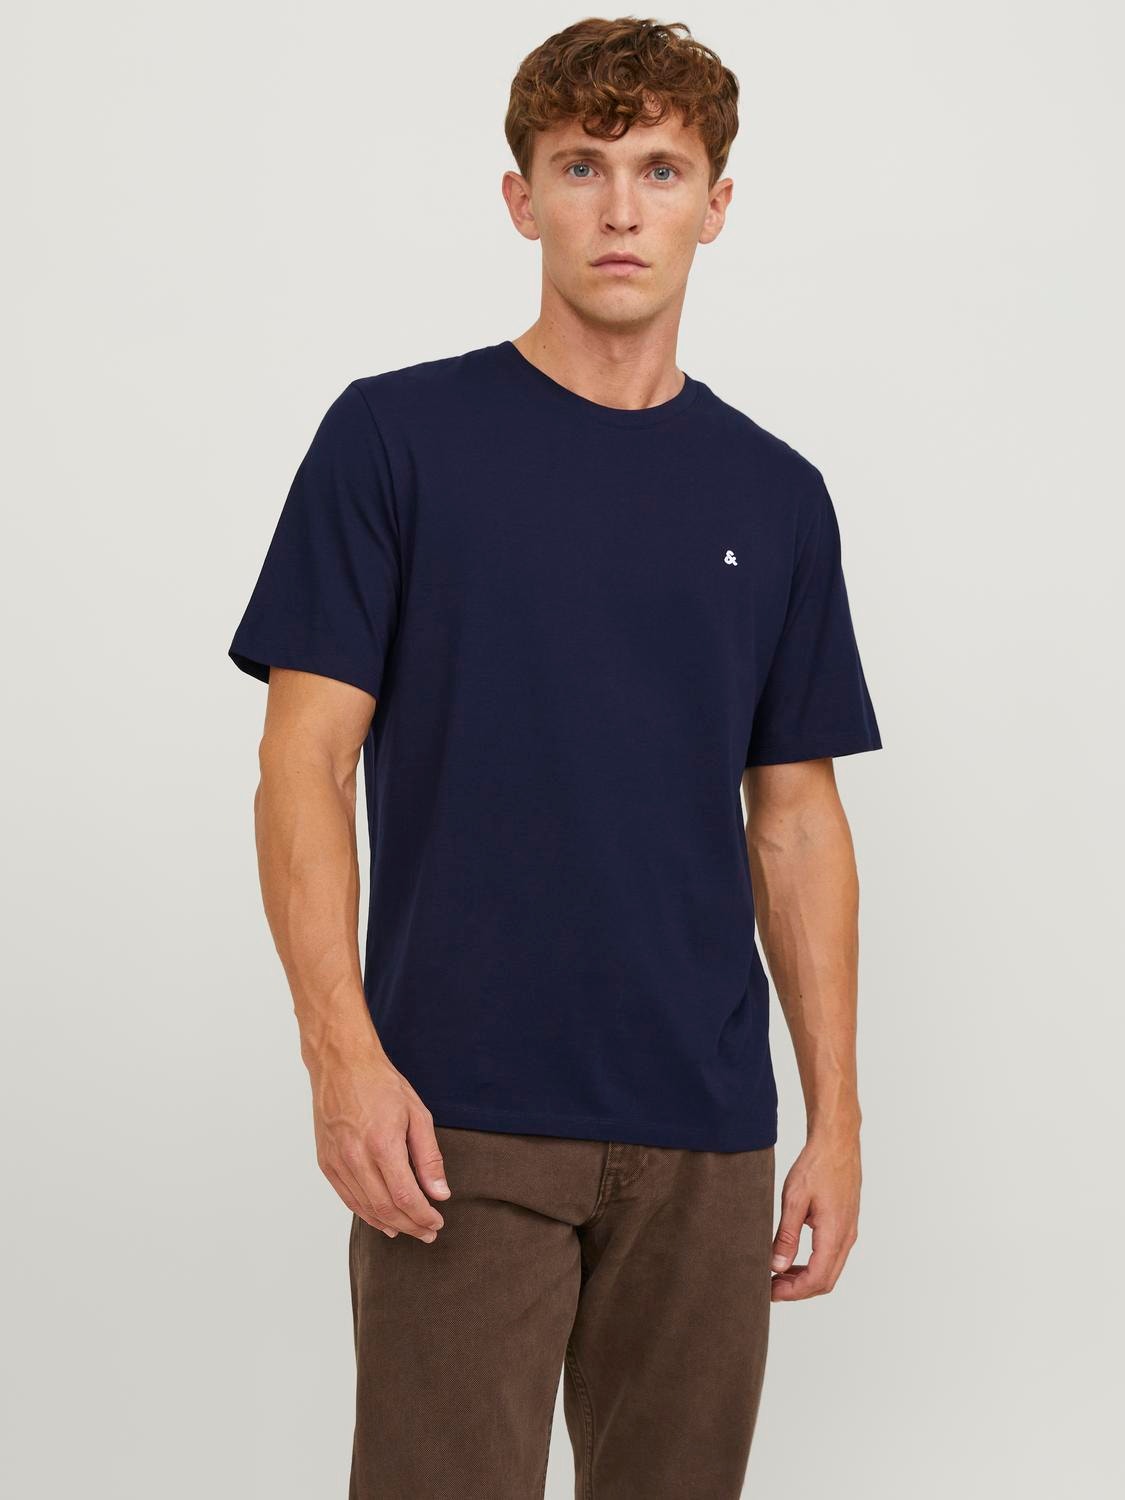 Jack & Jones Basic Ronde hals T-shirt -Navy Blazer - 12245087